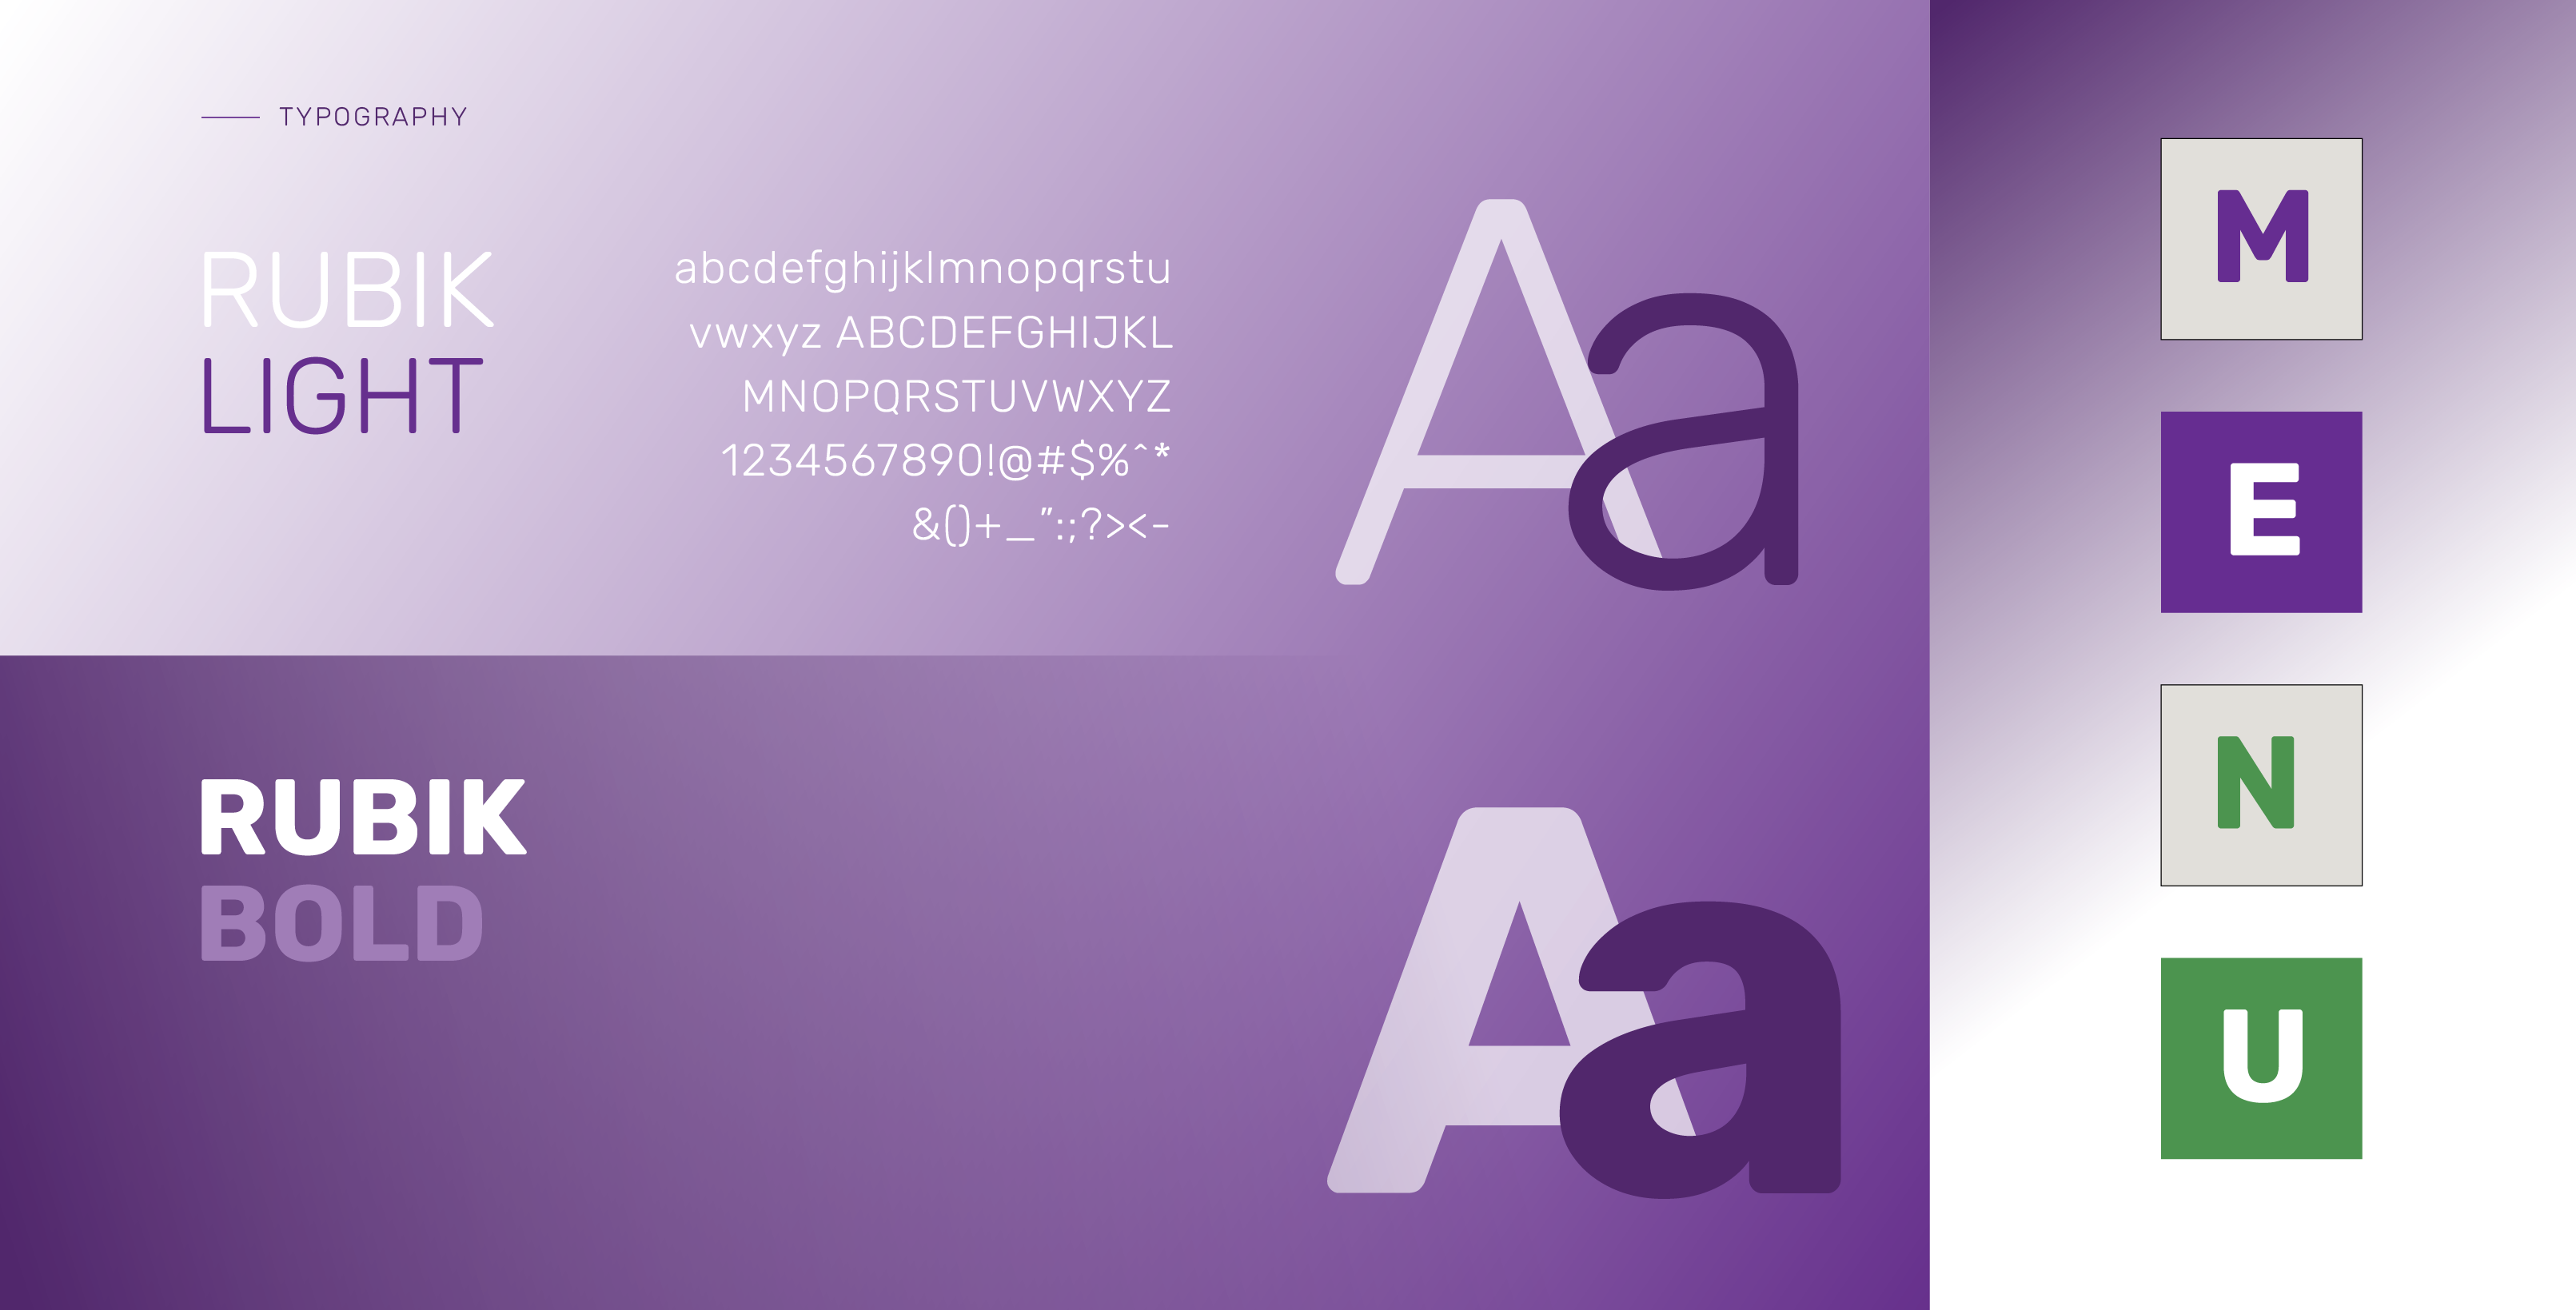 Parade typography, School website designers